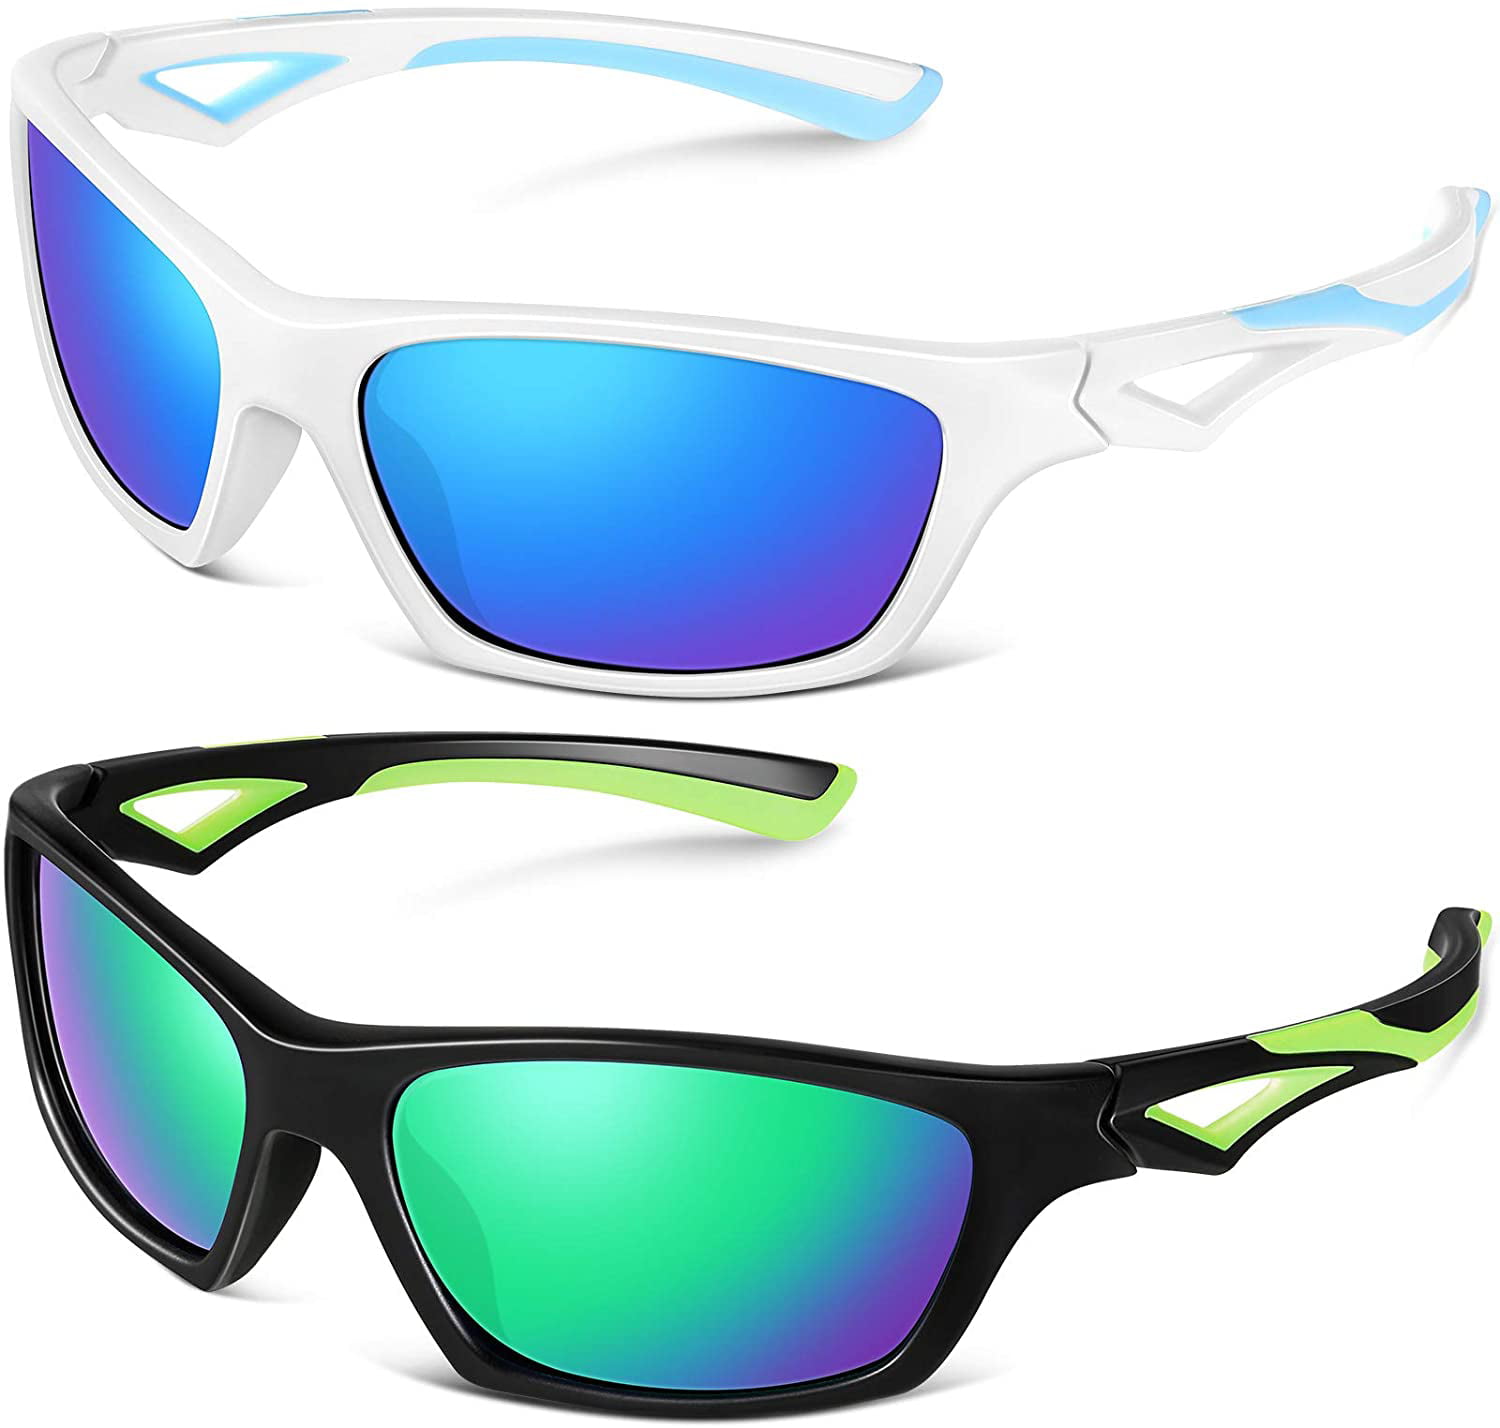 Kids Polarized Sunglasses TPEE Unbreakable Flexible Sport Glasses UV Protection for Boys Girls Age 3-7 